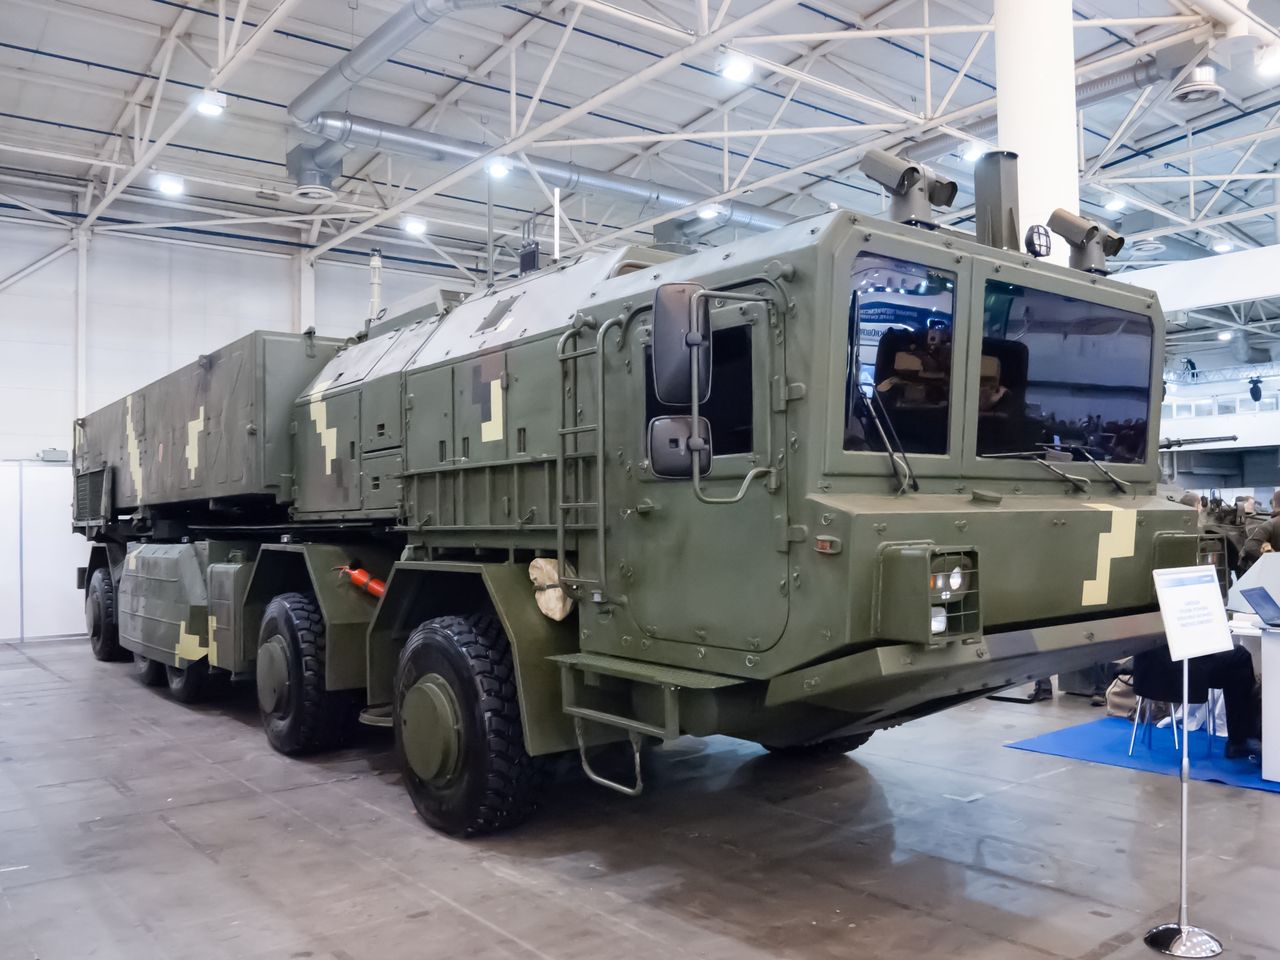 The Grim-2 ballistic missile. Ukraine's answer to ATACMS